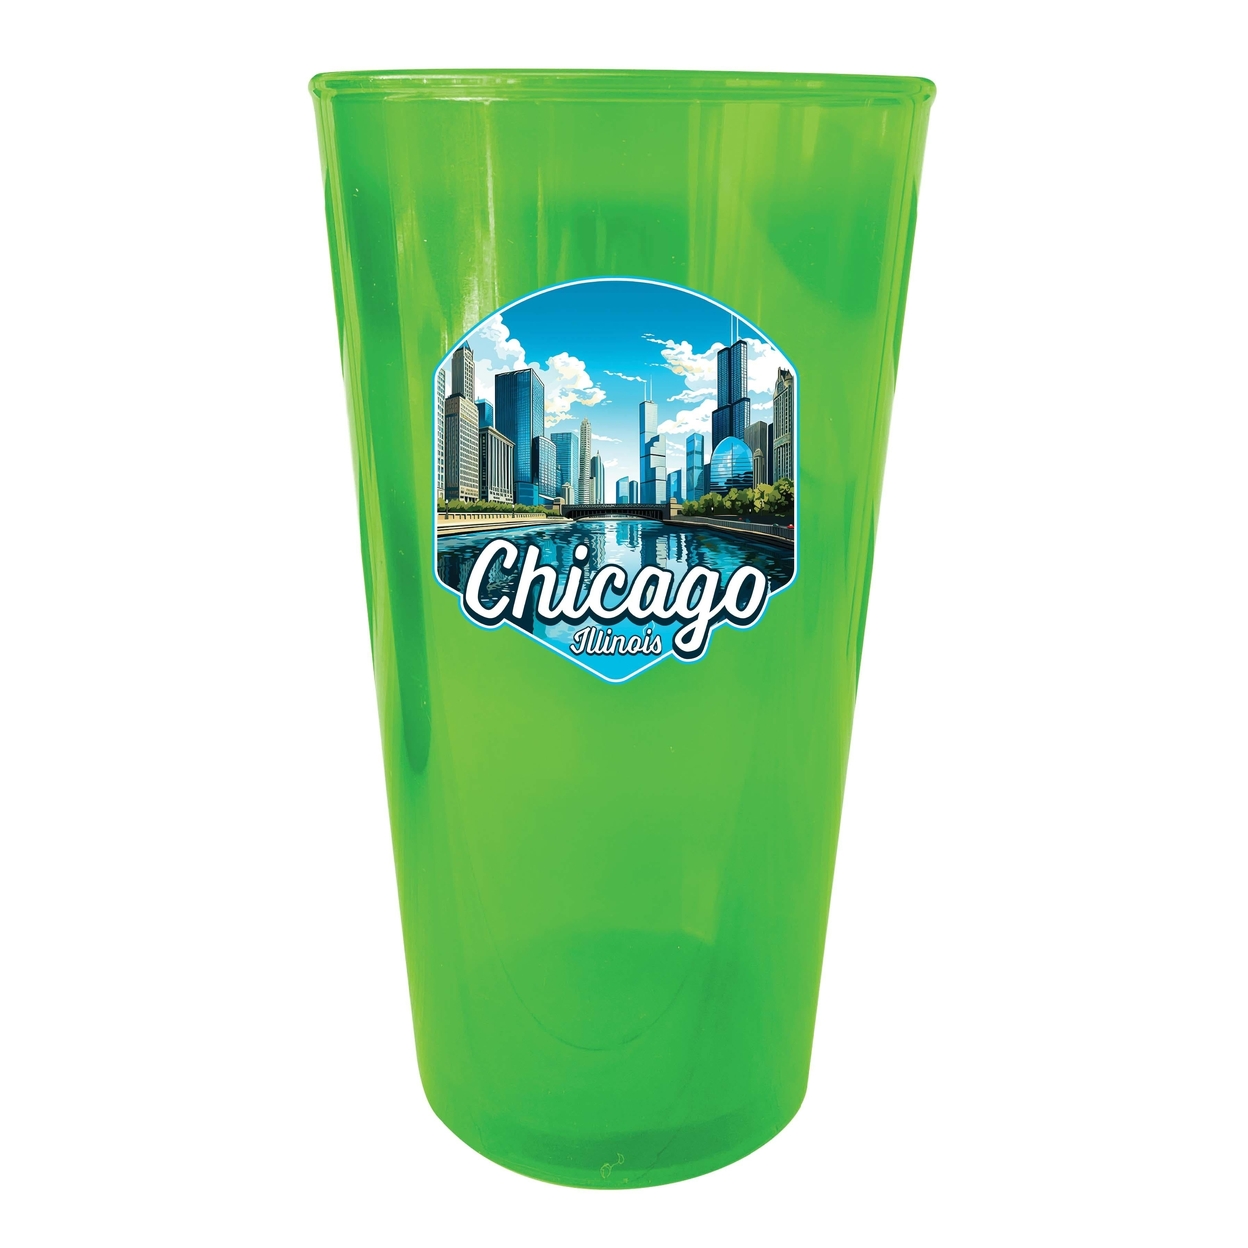 Chicago Illinois A Souvenir Plastic 16 Oz Pint - Green,,Single